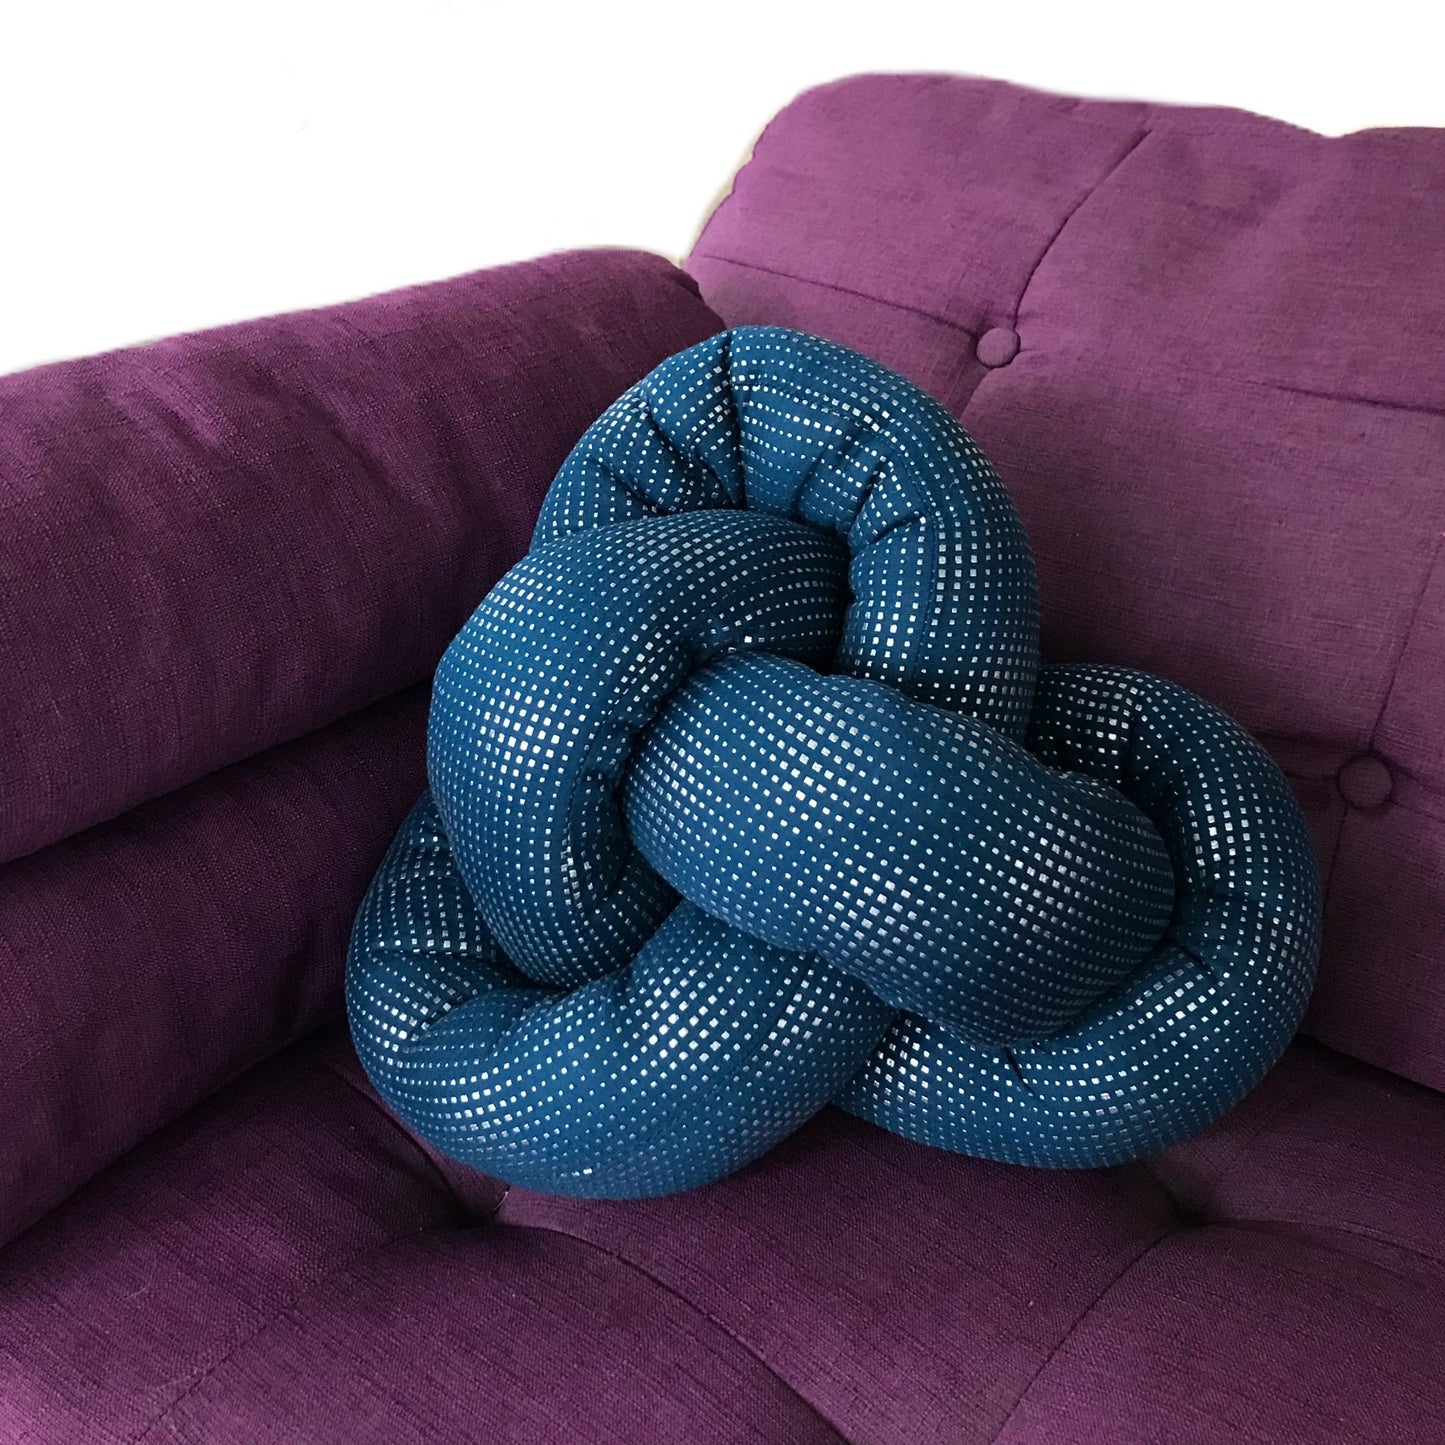 Peacock Blue Celtic Knot Pillow - 11" x 14" Decorative Throw Pillow